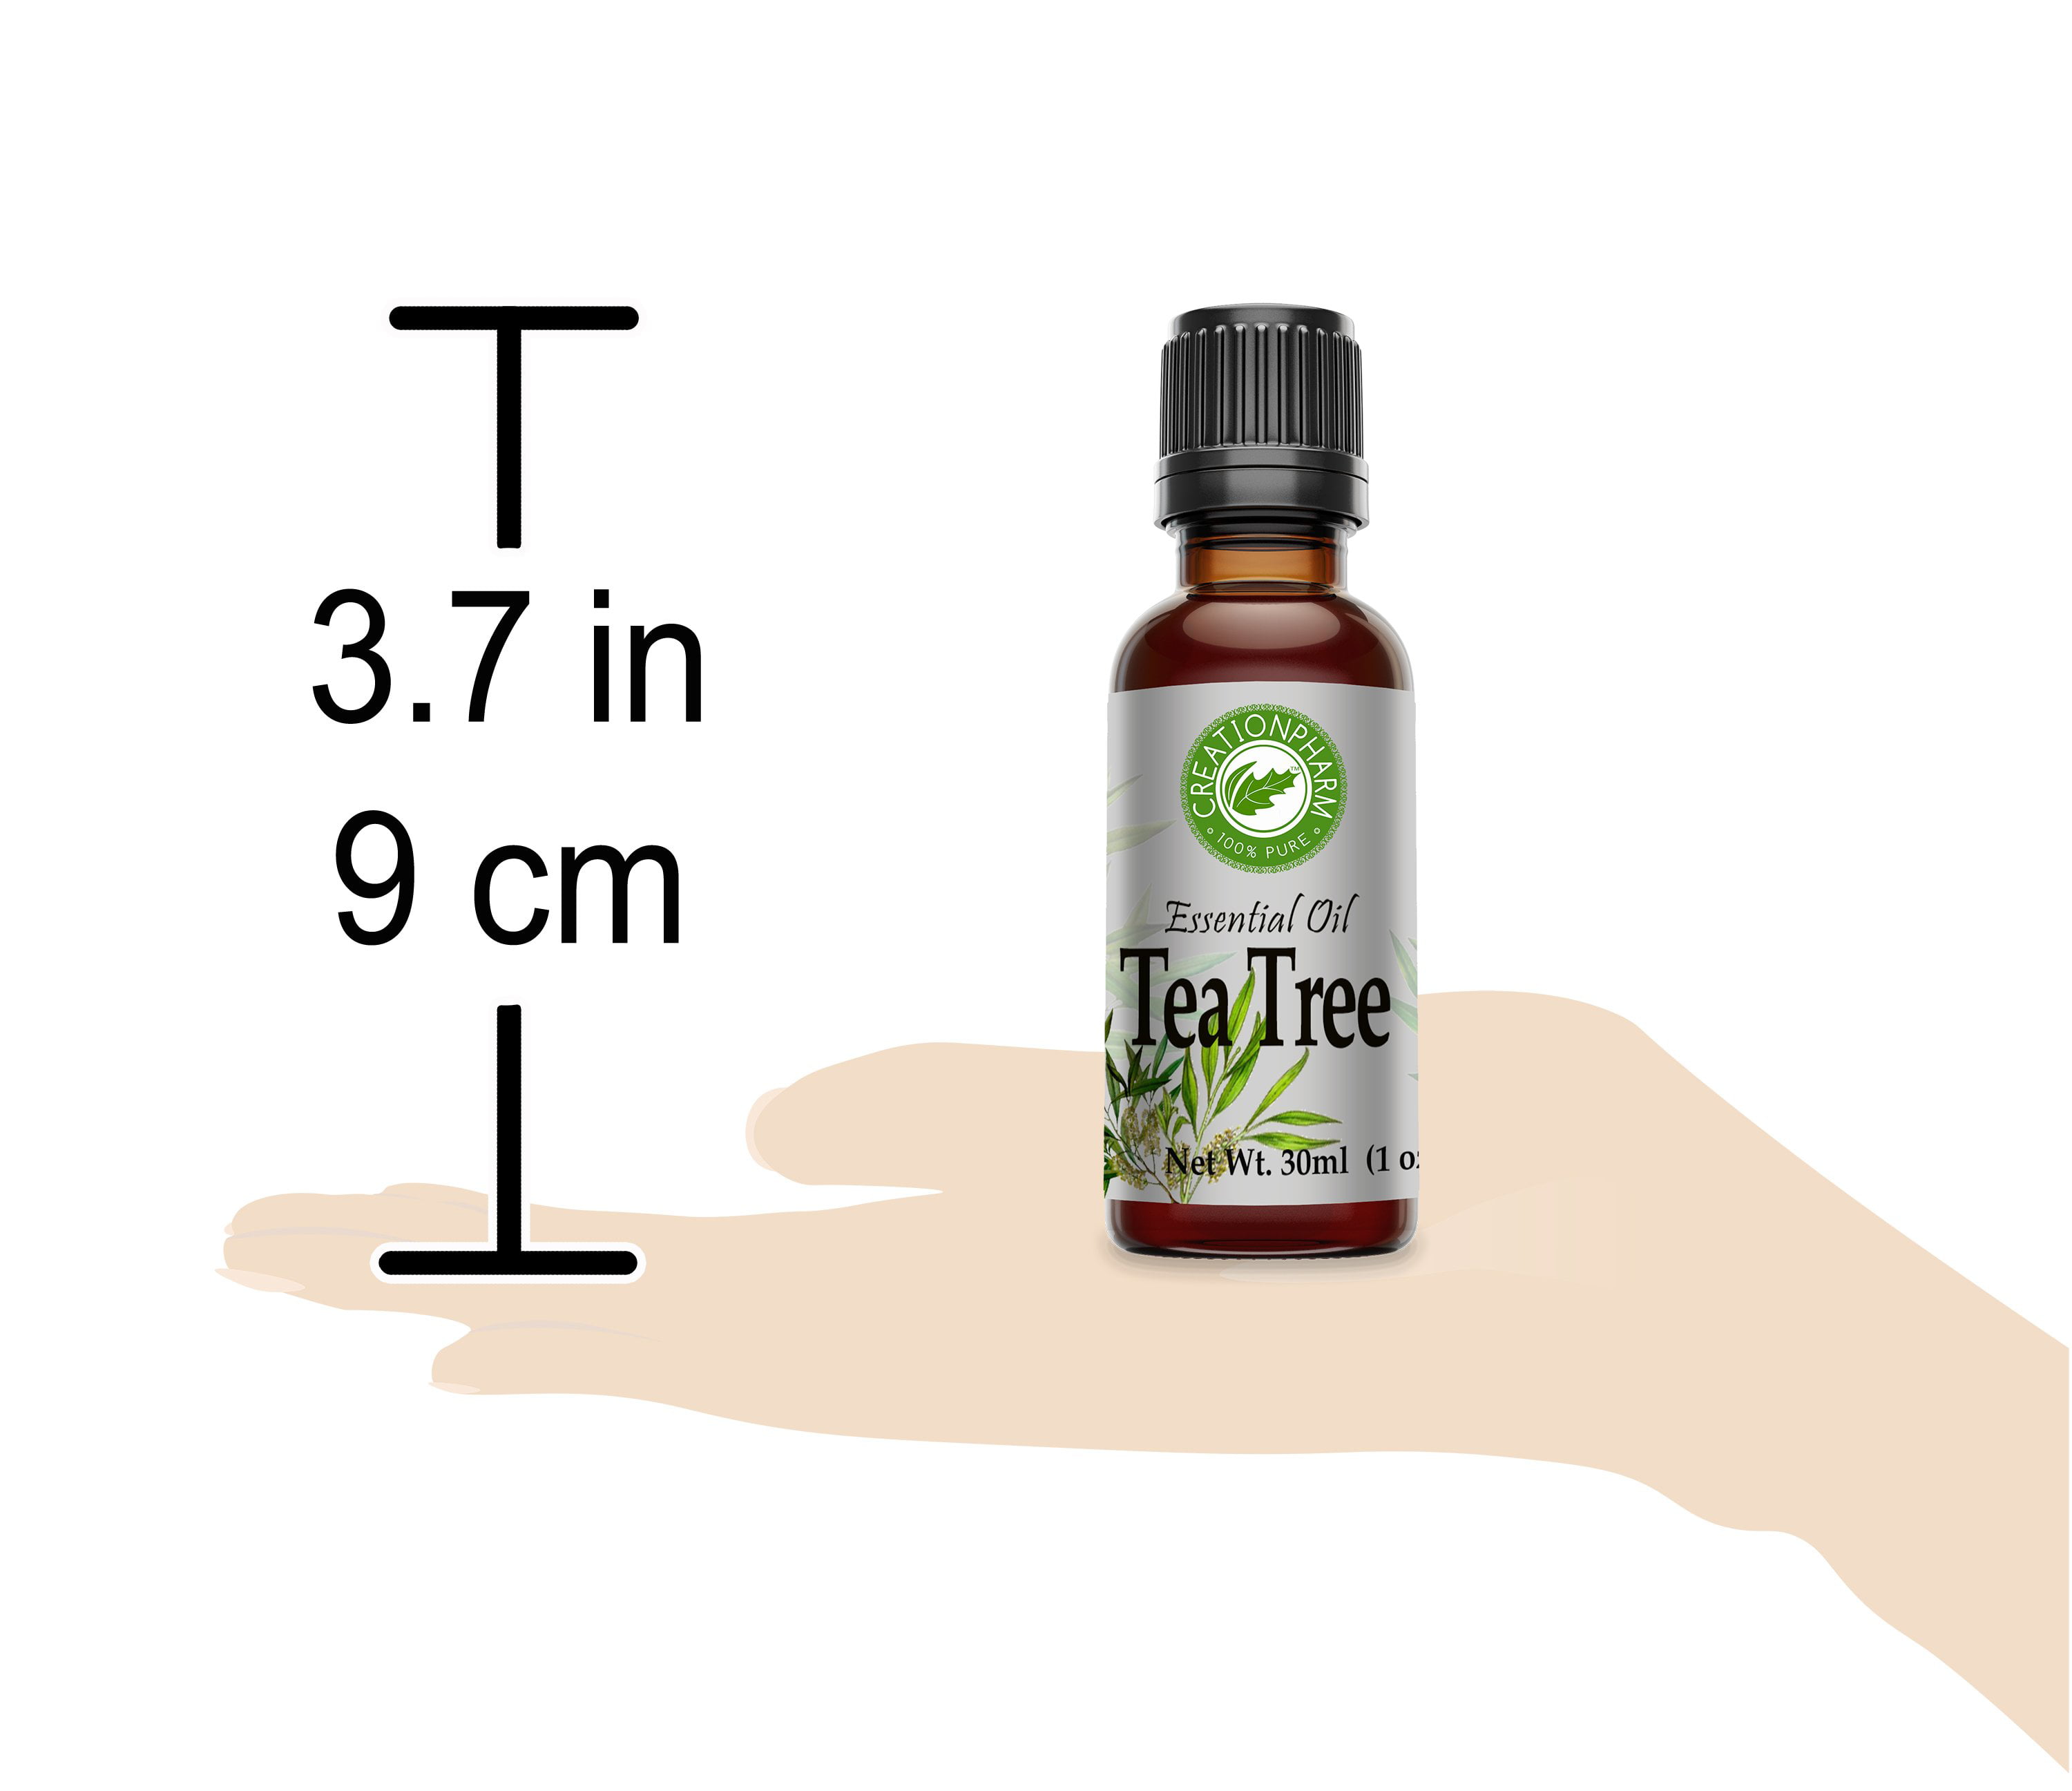 TEA TREE OIL SOAP/JABON DE ACEITE DE ARBOL 100GRS 100% NATURAL  antibacterial